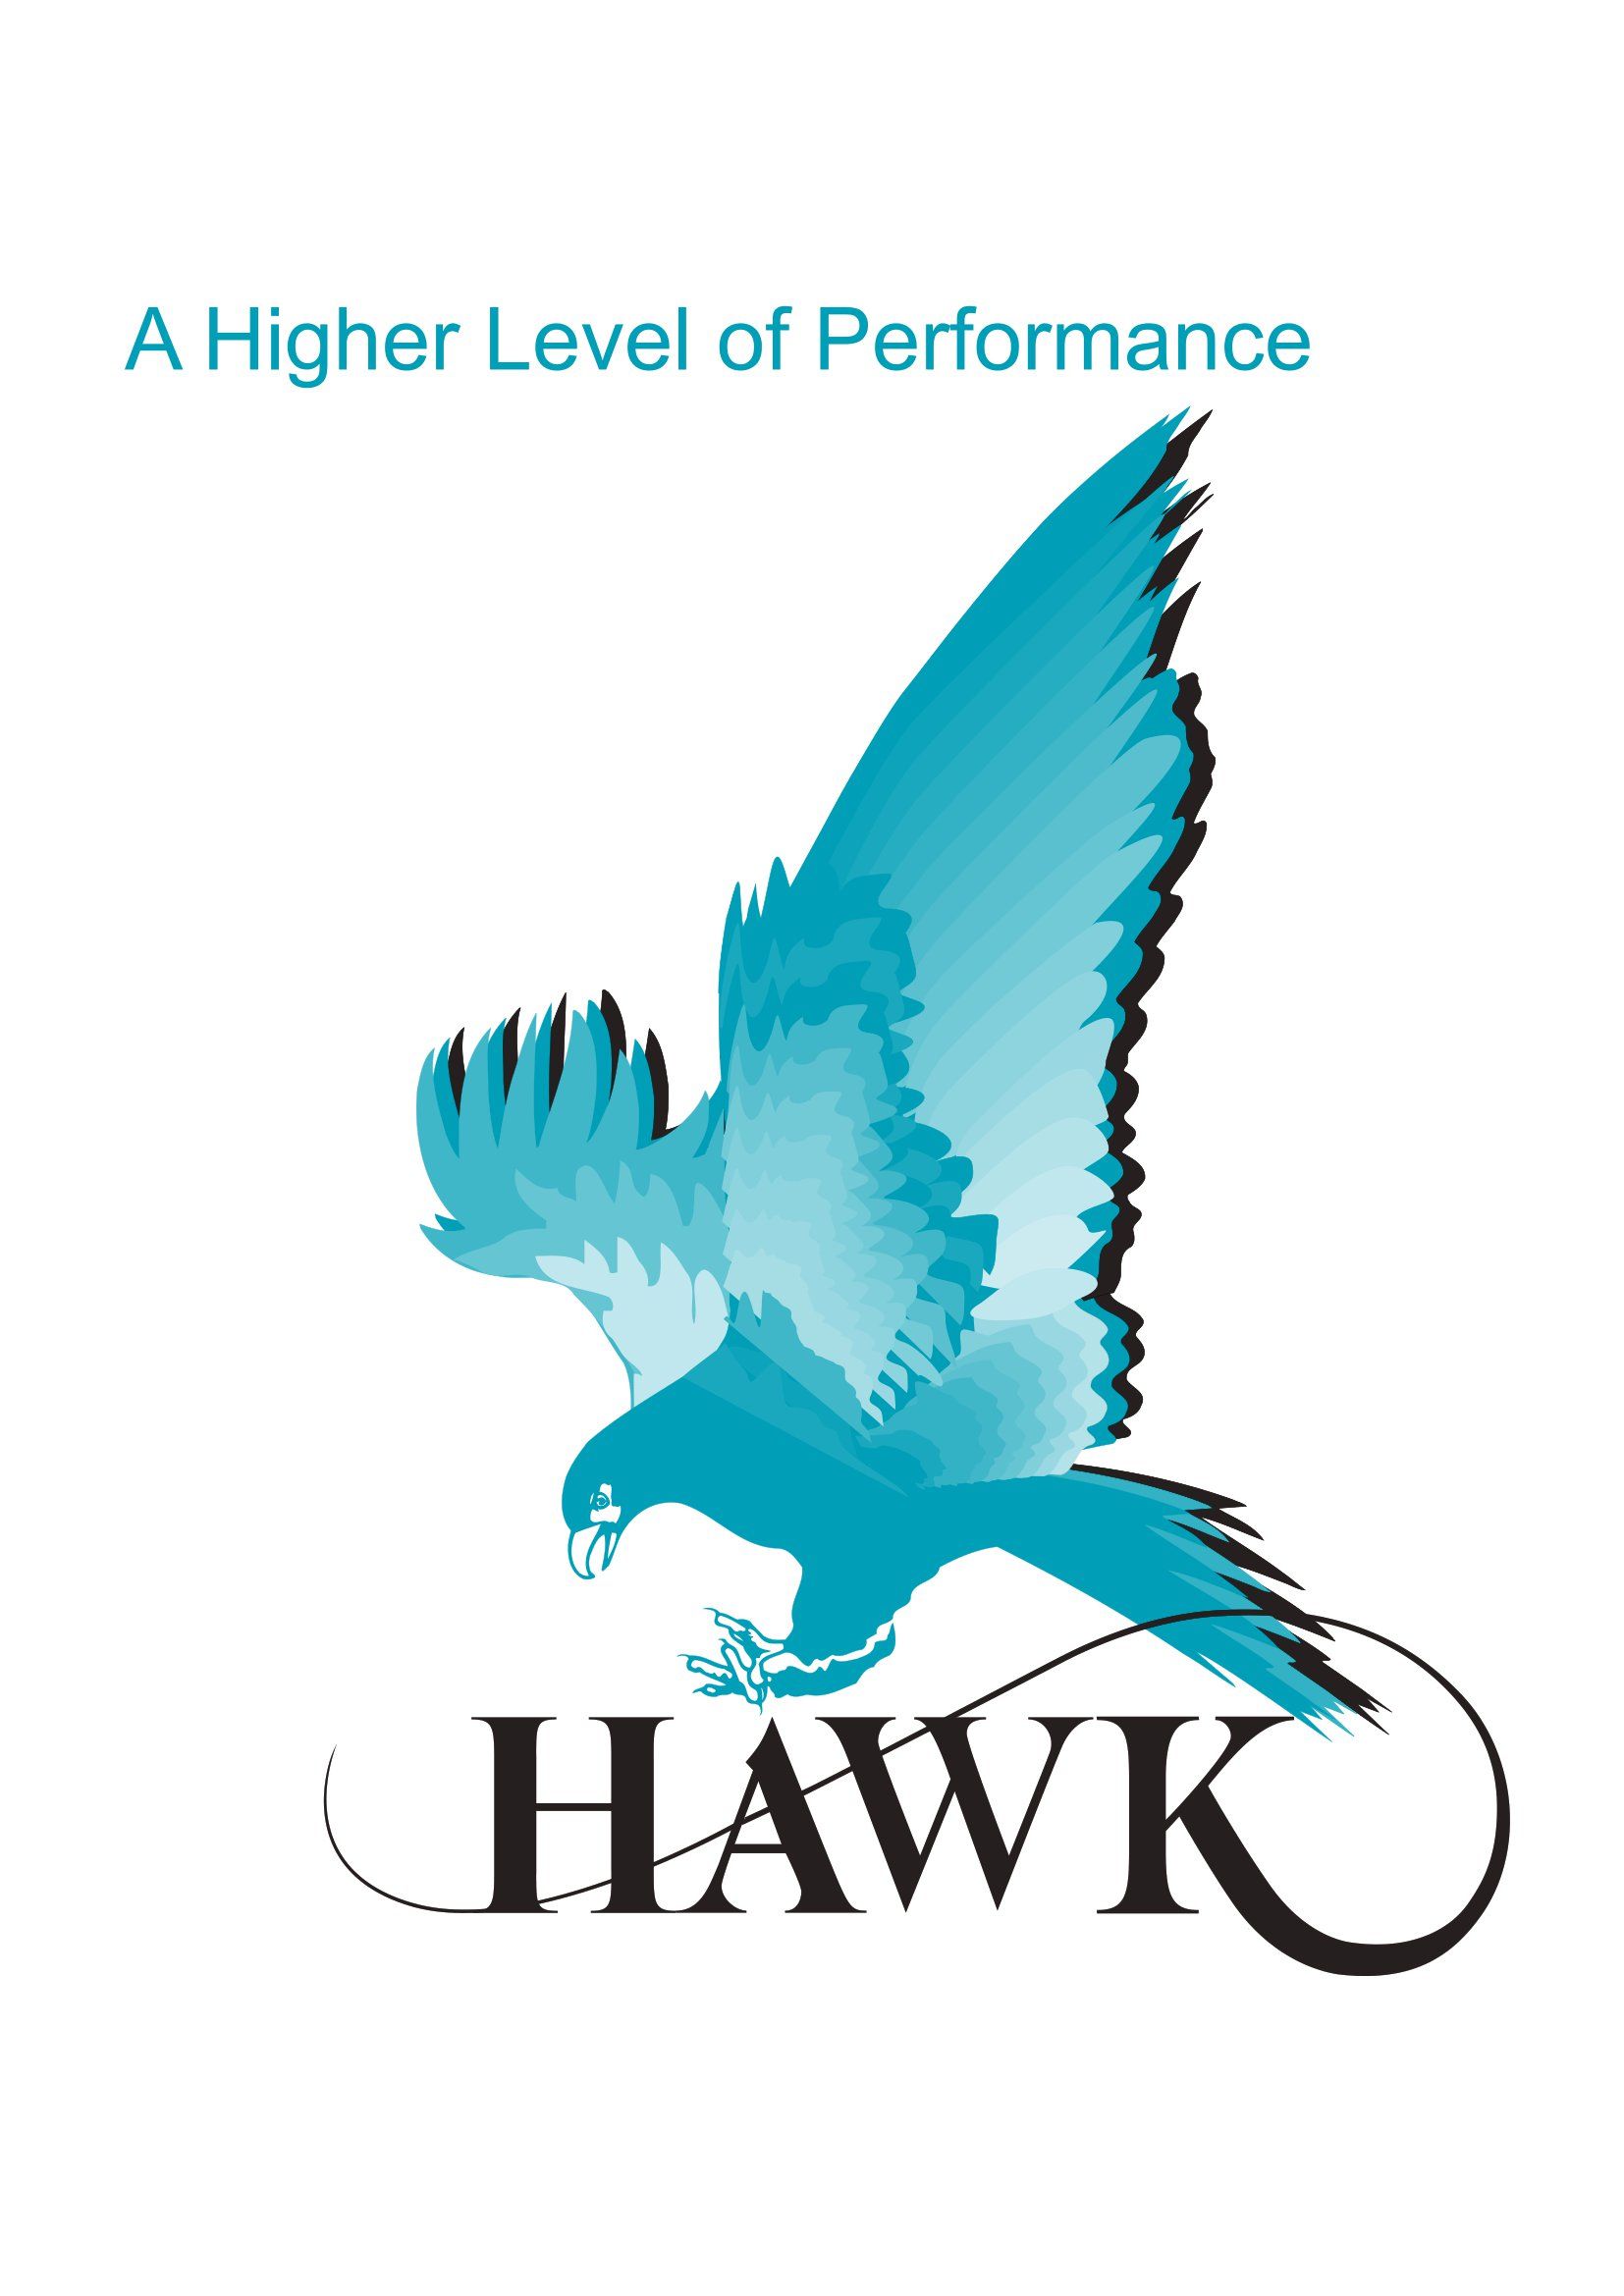 Hawk Measurement Systems